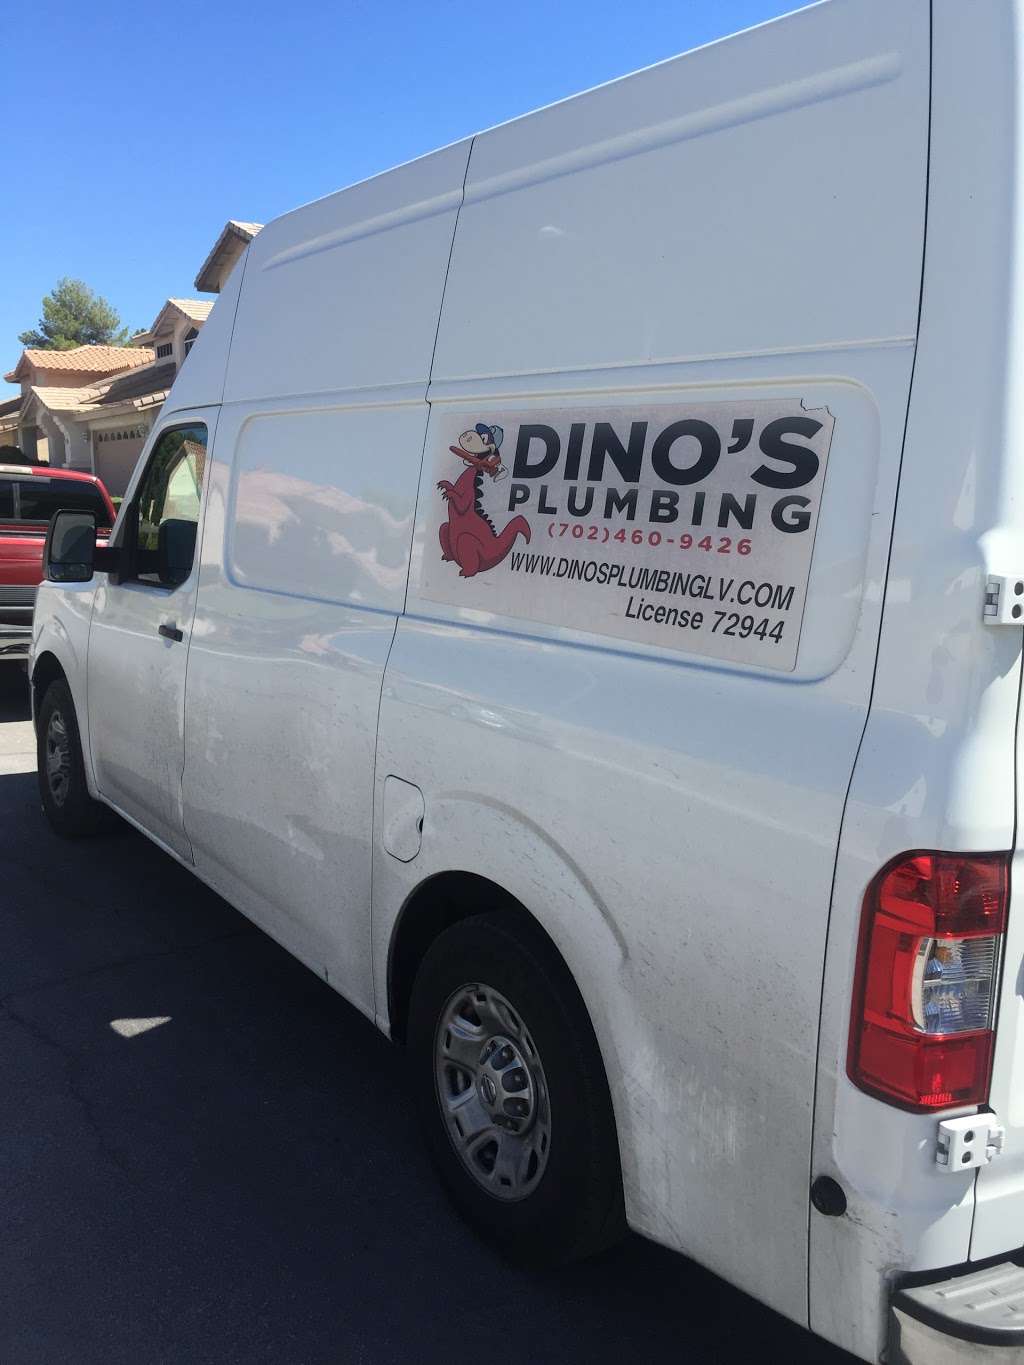 Dinos Plumbing | 10300 W Charleston Blvd, Las Vegas, NV 89135, USA | Phone: (702) 460-9426